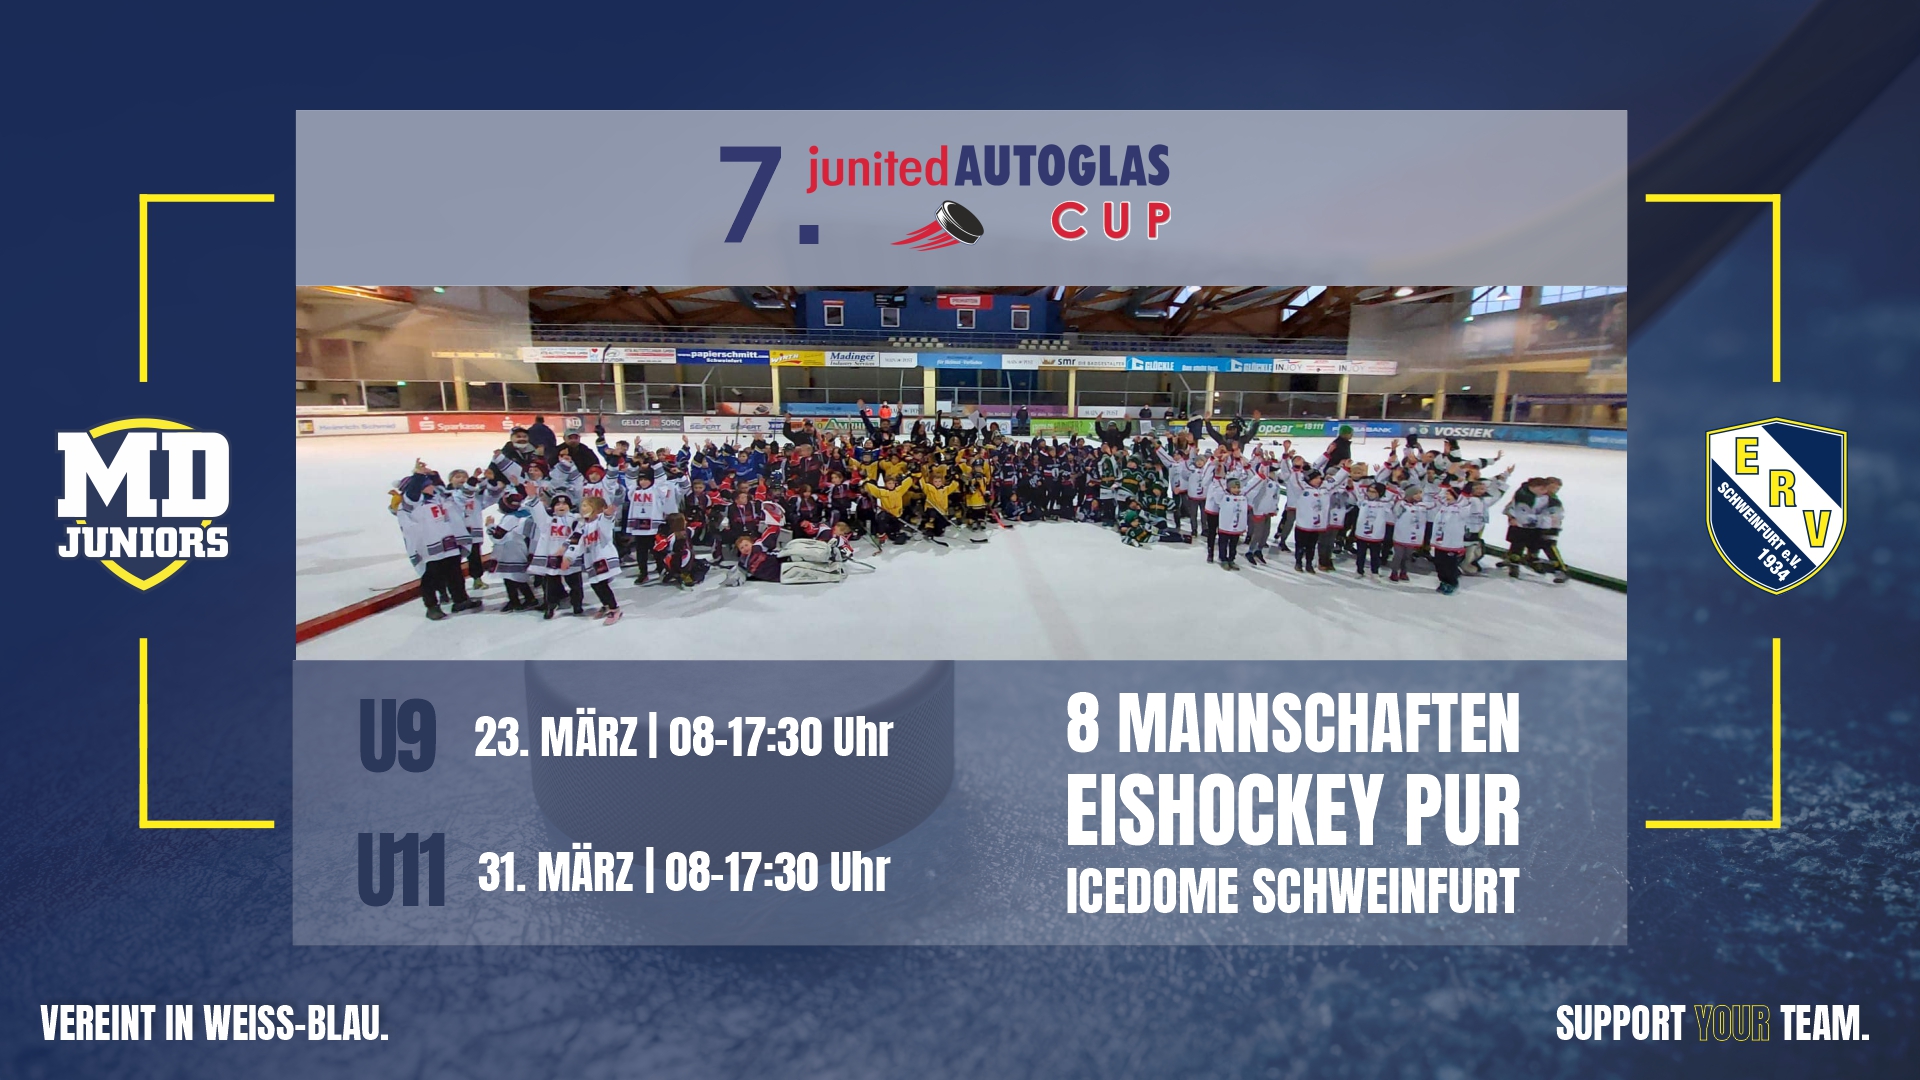 7. junited Autoglas CUP – Eishockey Turnier Alterklasse U9 und U11